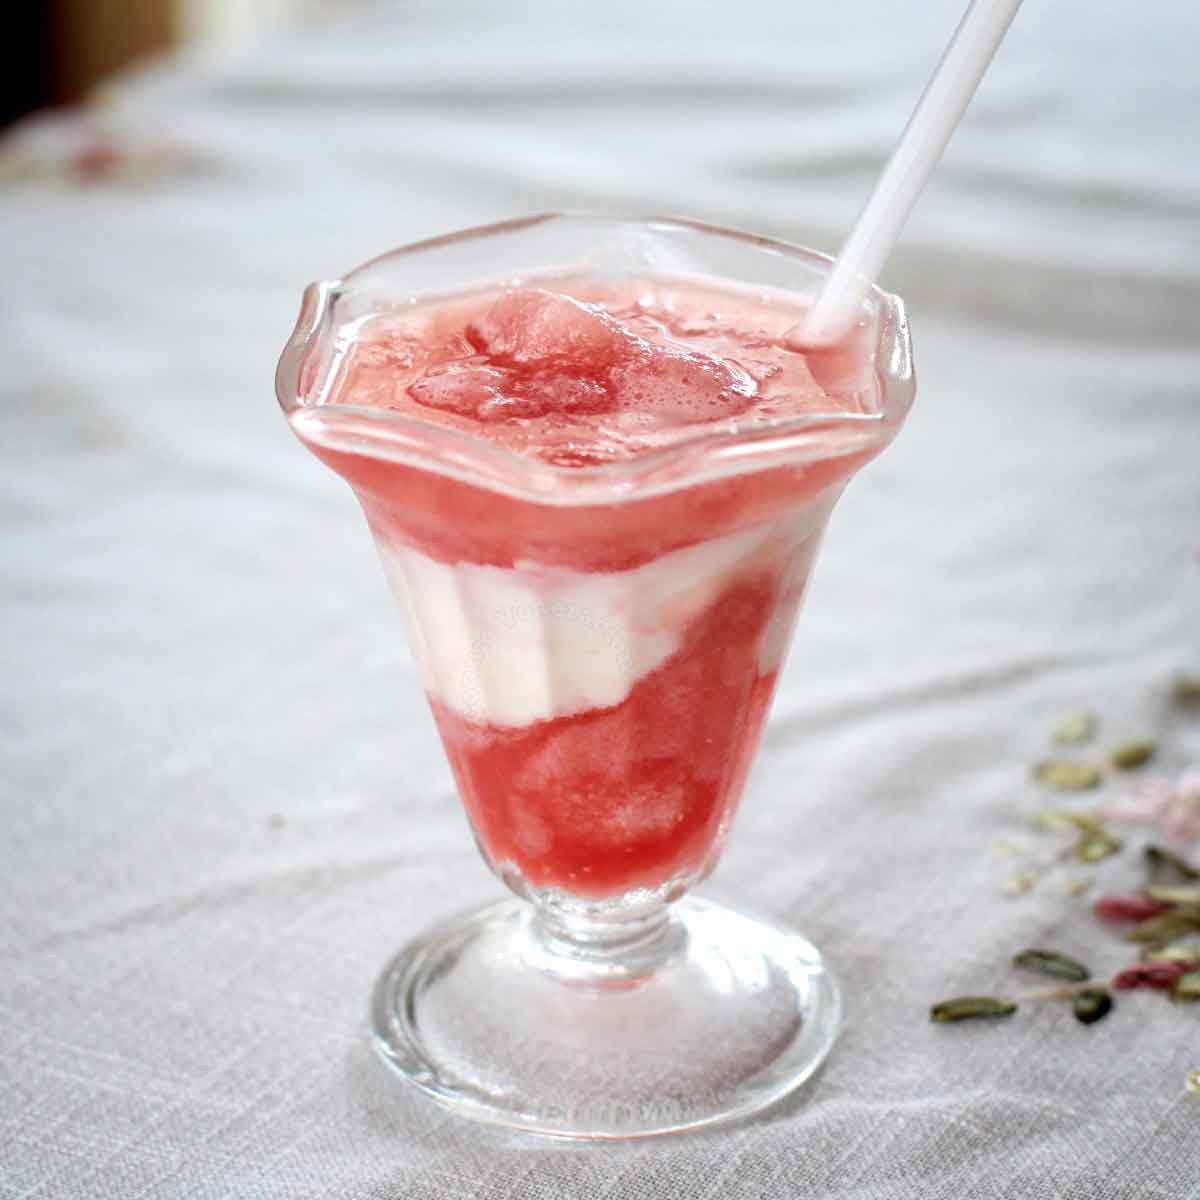 Watermelon and yogurt smoothie